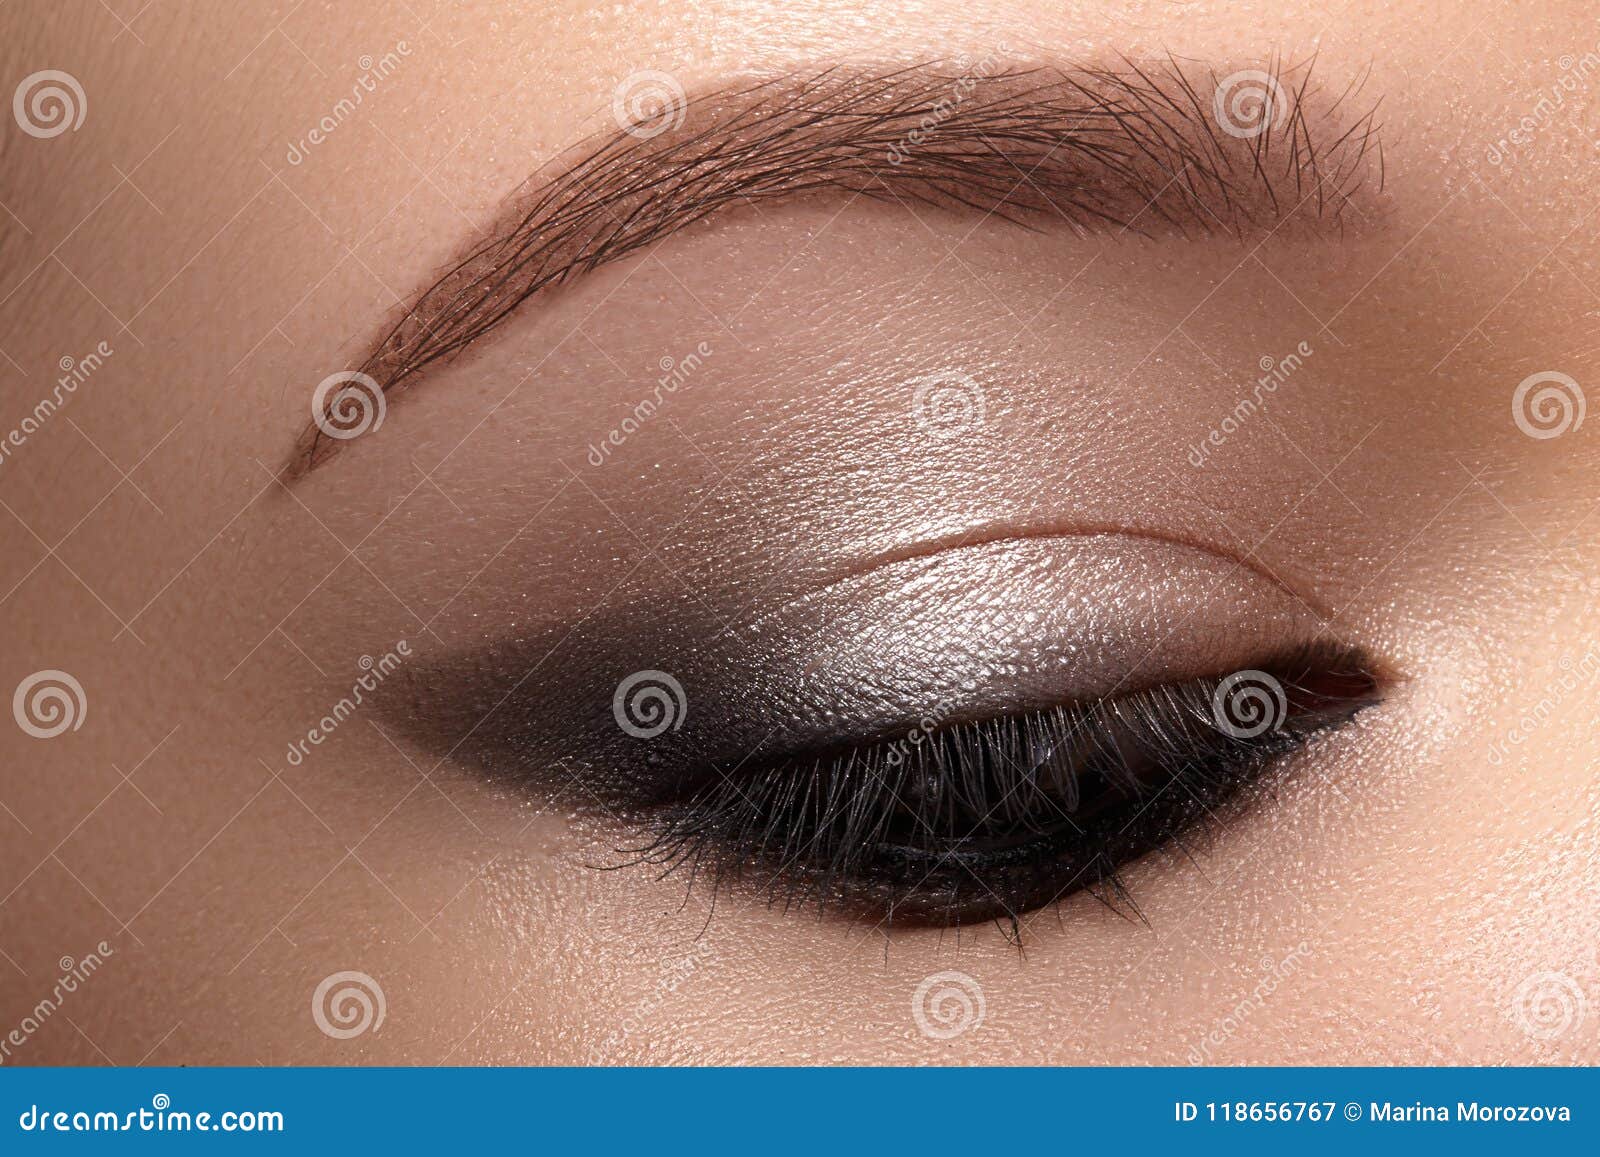 beautiful macro eyes with smoky cat eye makeup. cosmetics and make-up. closeup of fashion visage with liner, eyeshadows